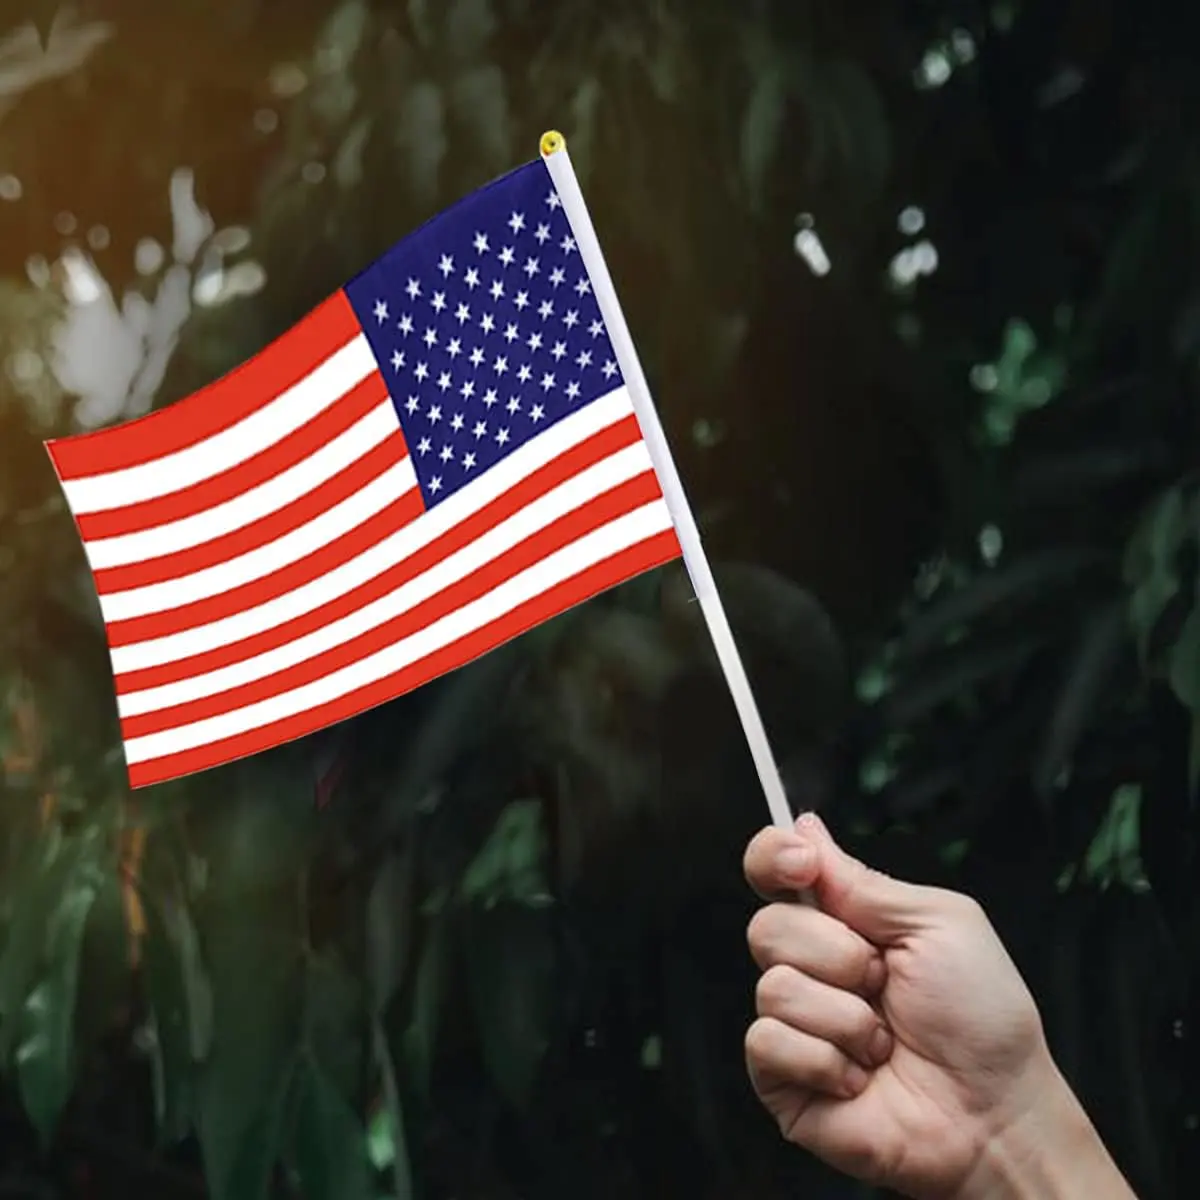 Рекламные мини-флаги с флагом США